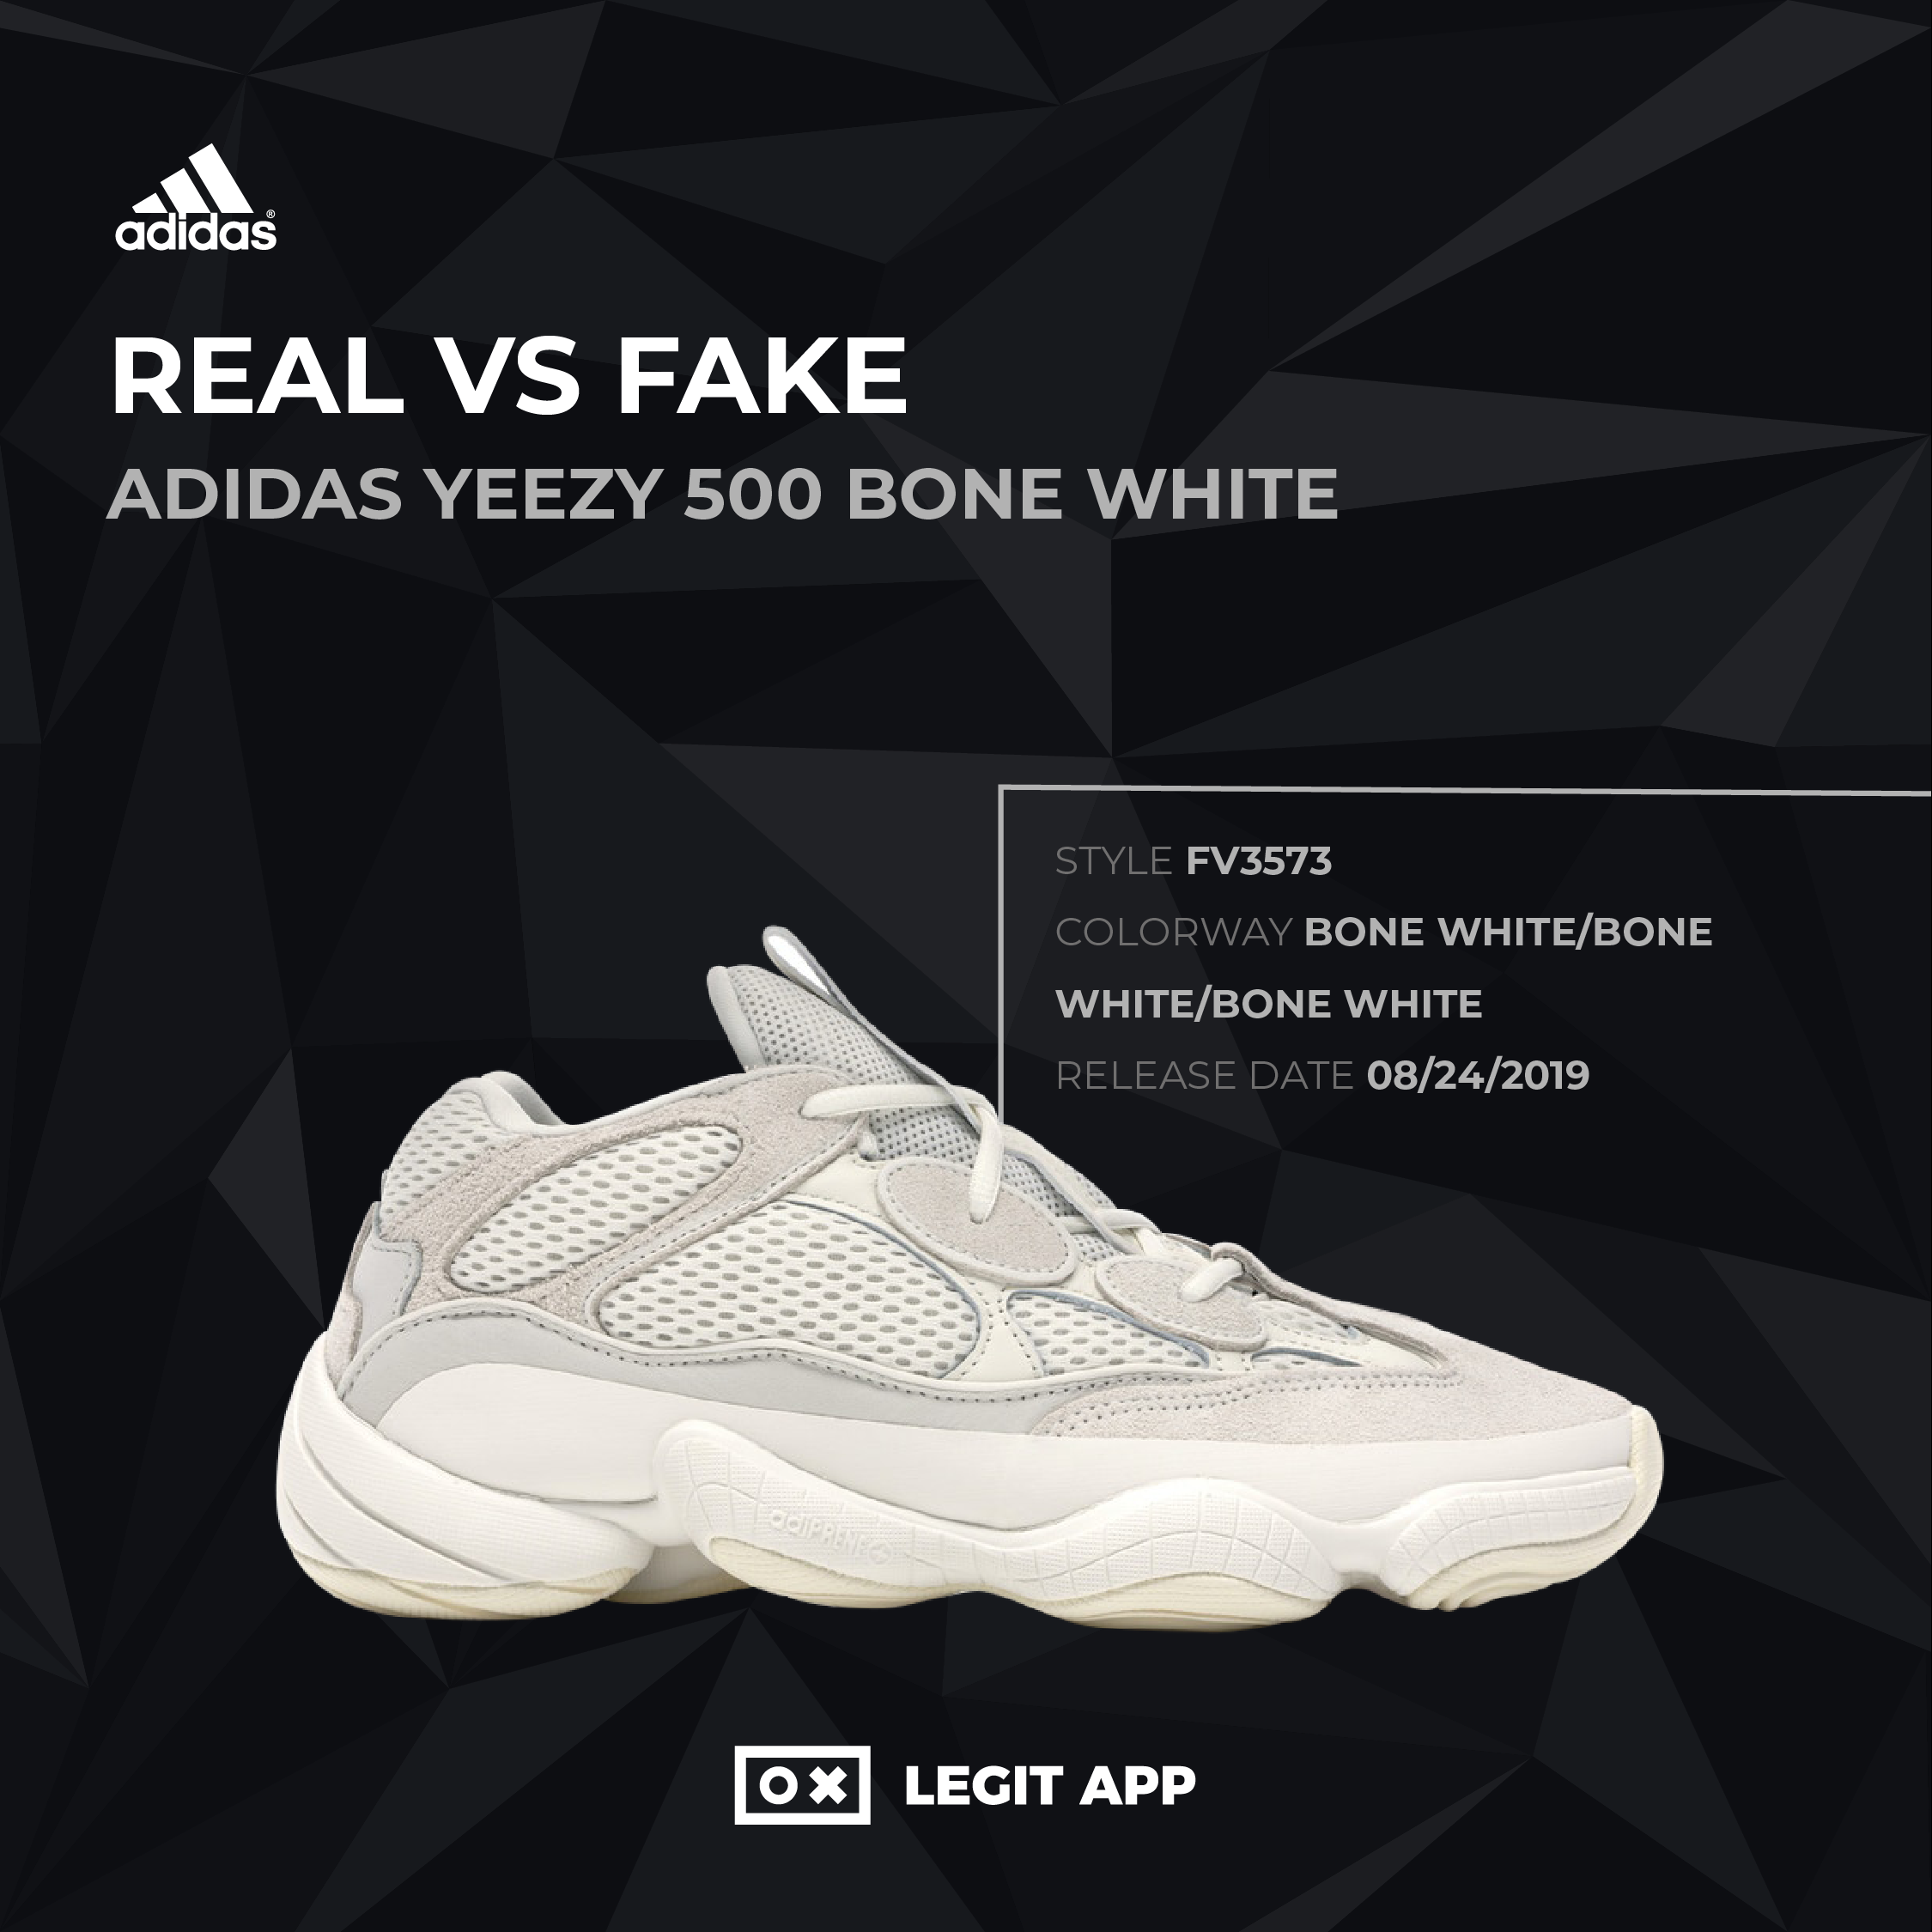 REAL REPLICA - adidas Yeezy Bone White | LEGIT APP